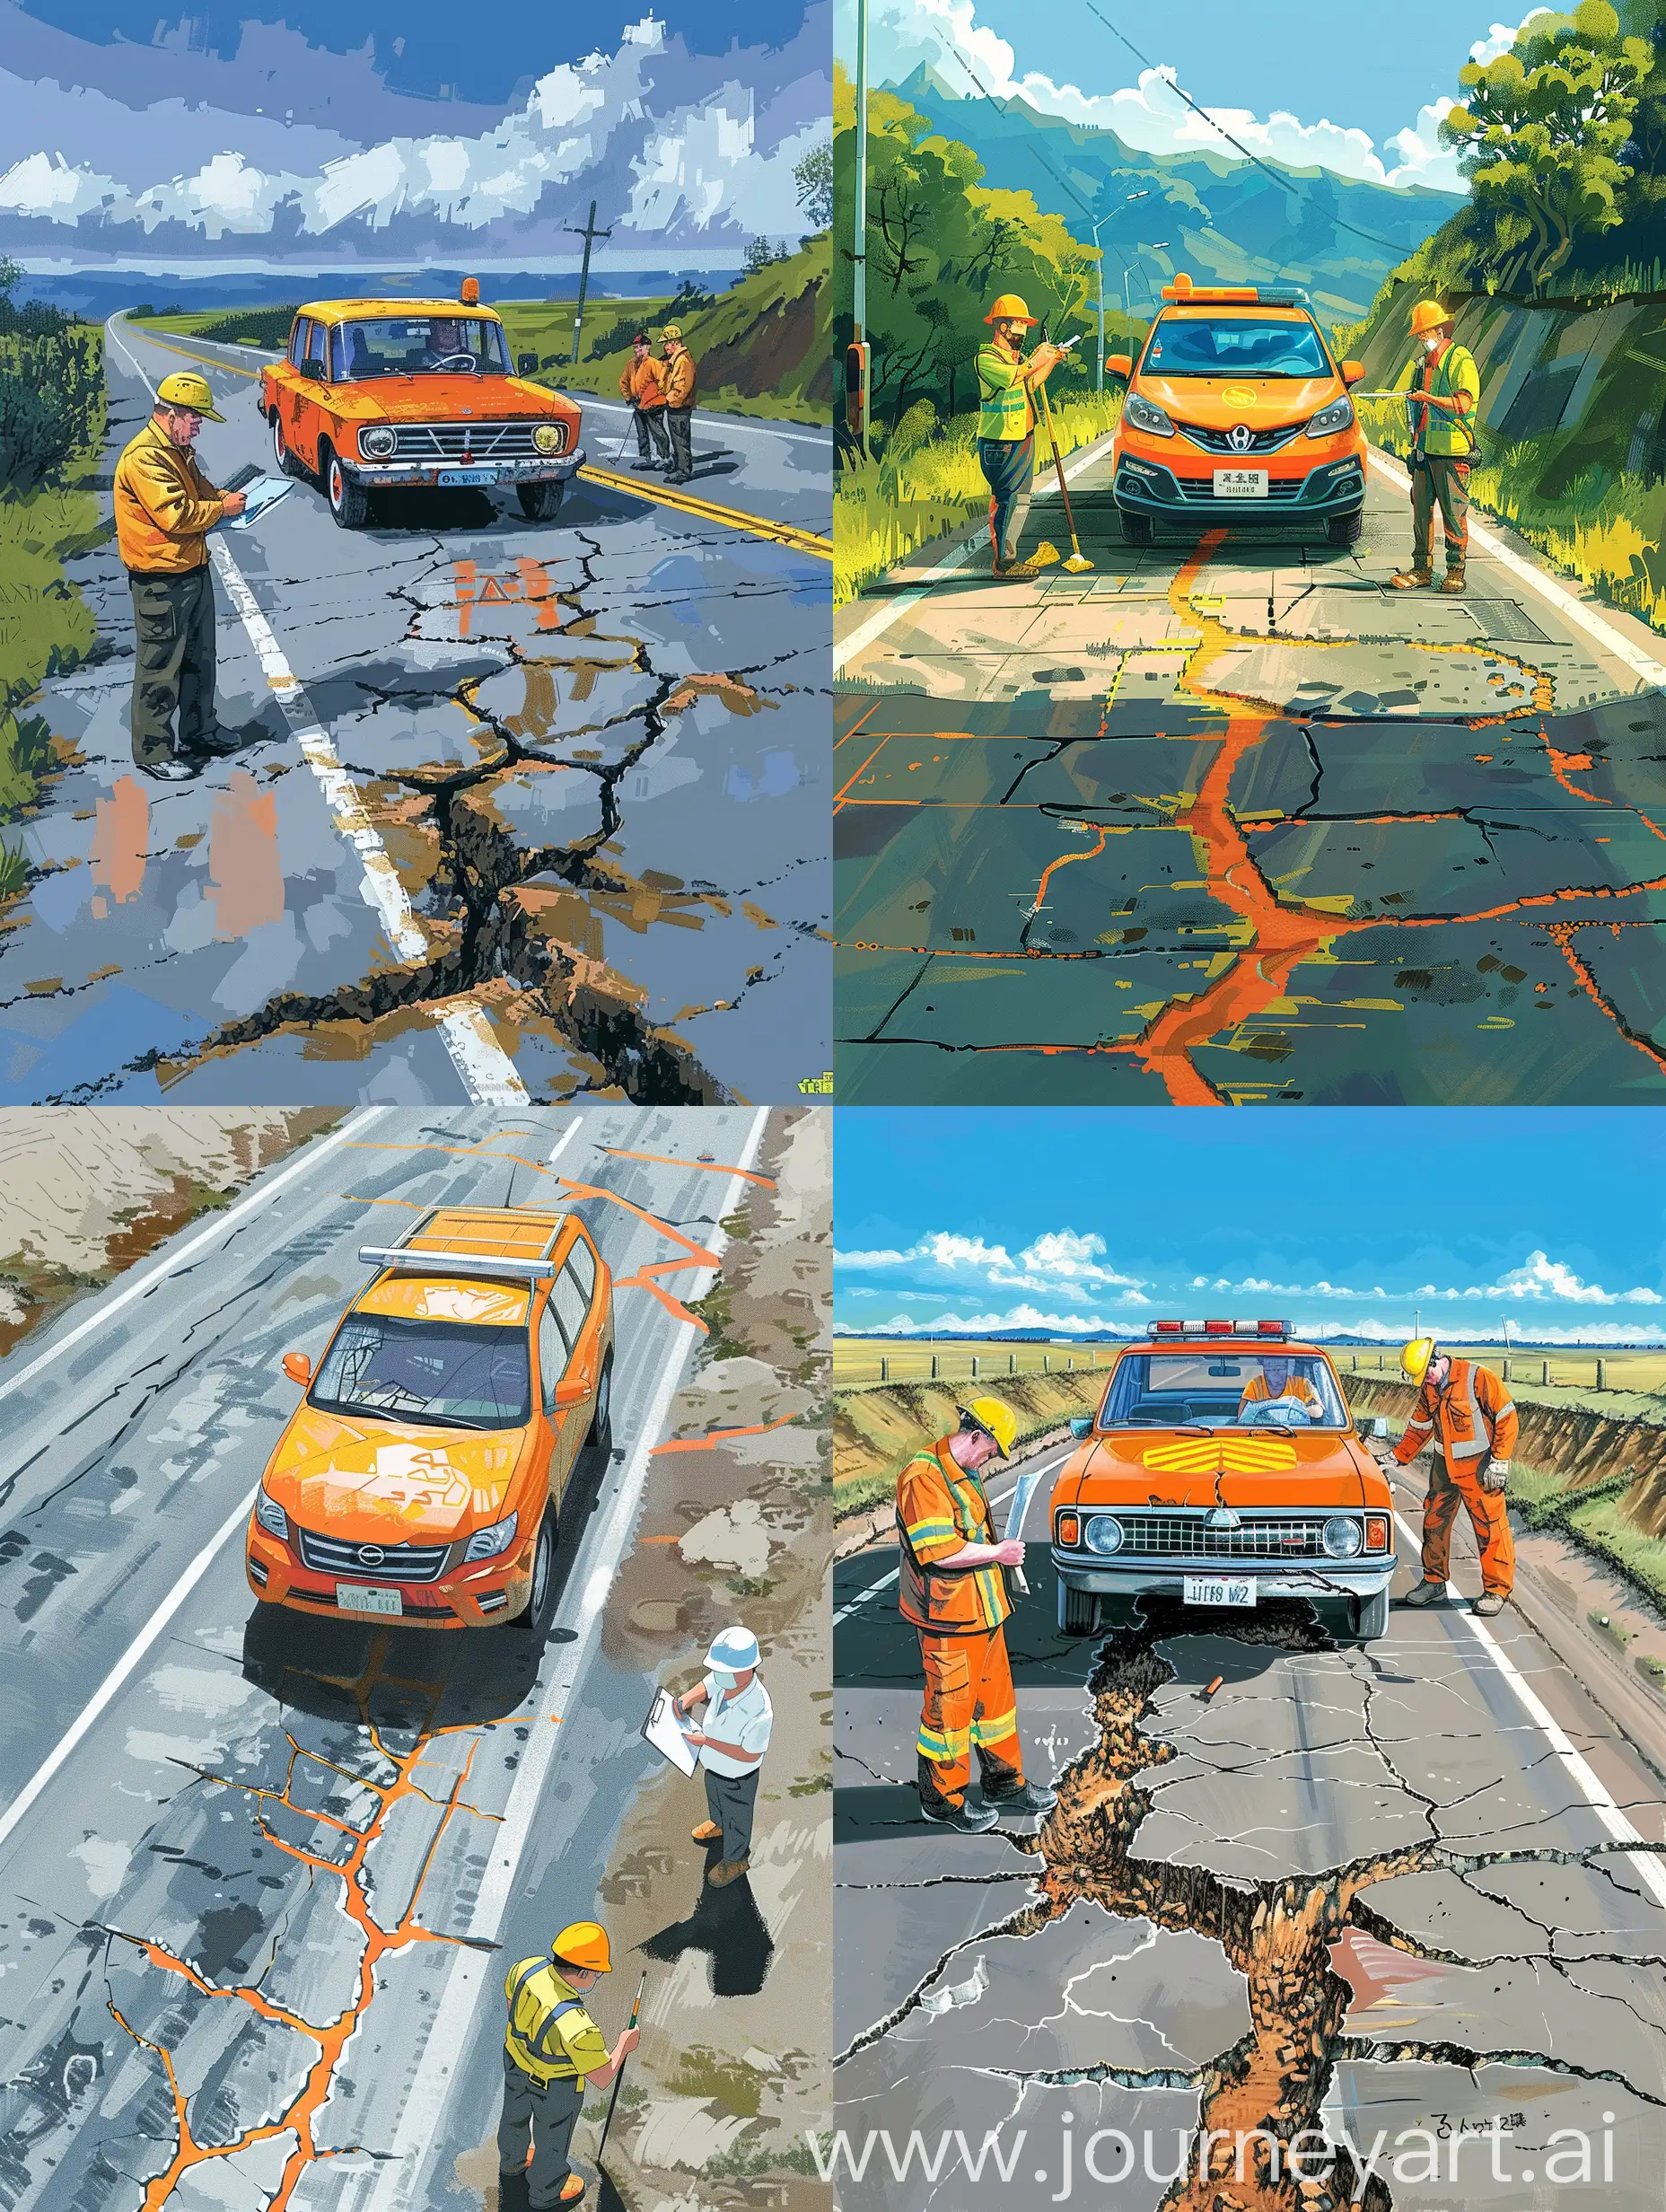 Municipal-Maintenance-Workers-Inspecting-Road-Cracks-Cartoon-Style-Scene-with-Engineering-Vehicle